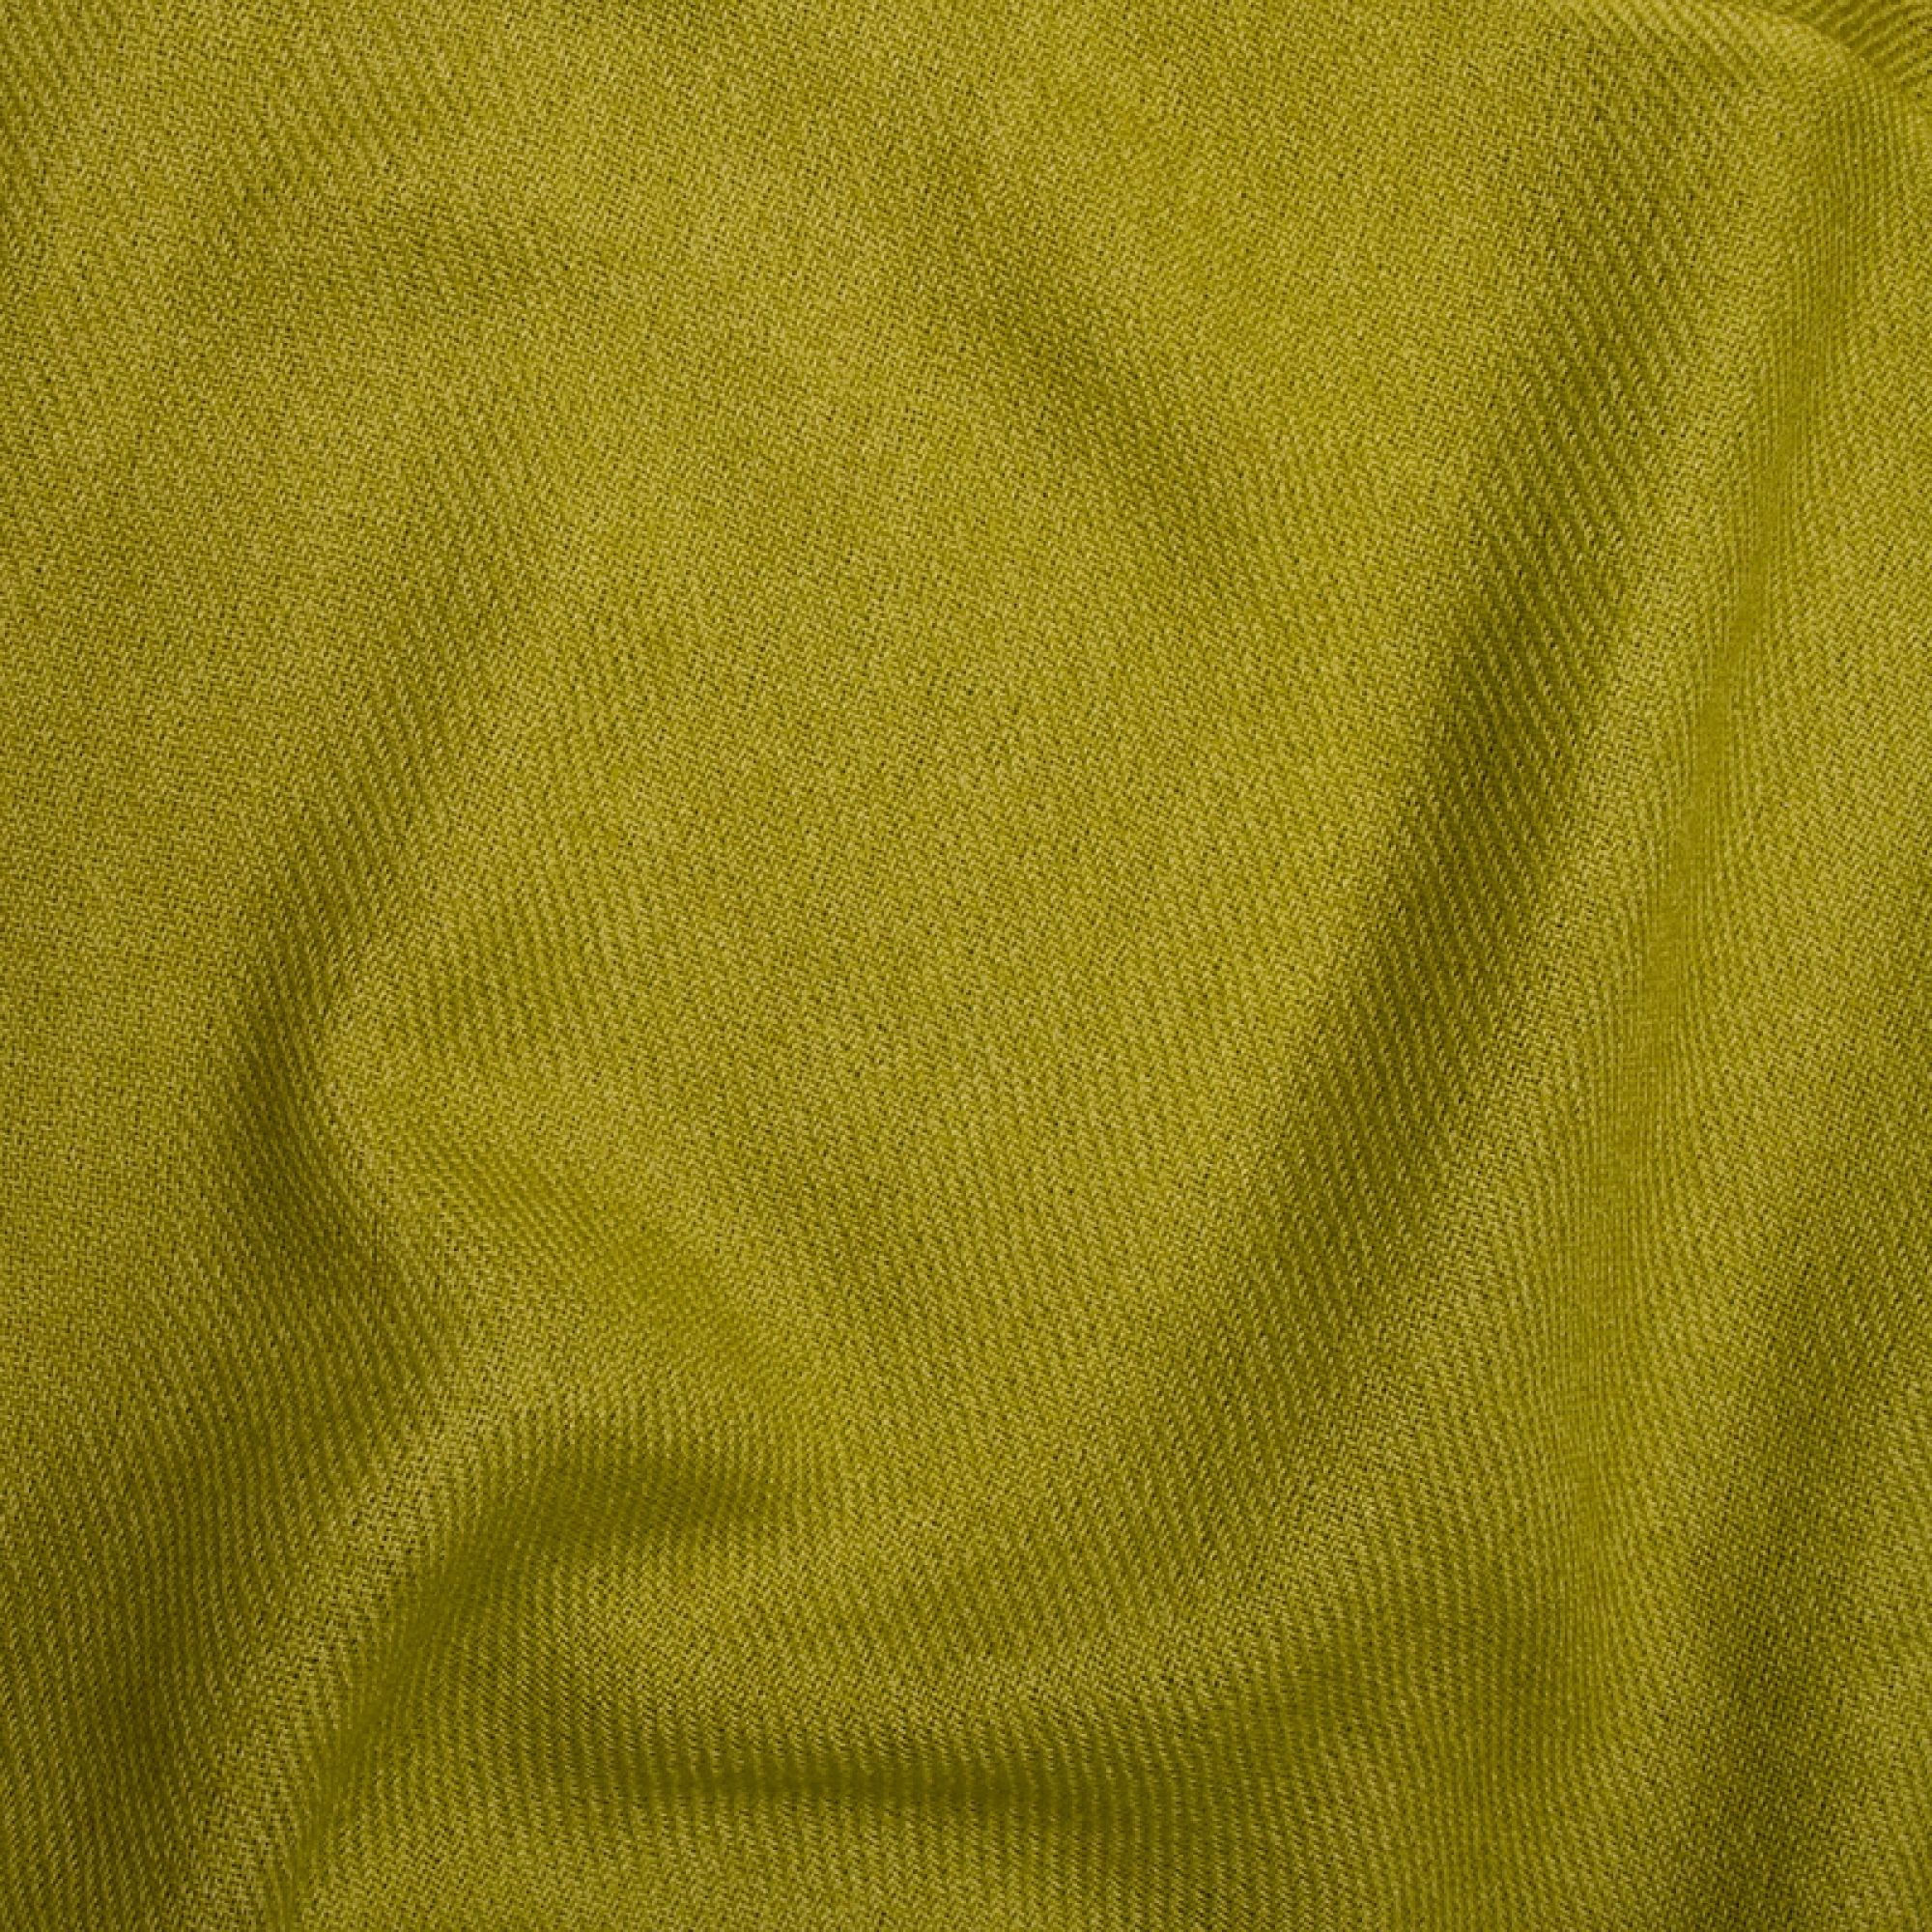 Cachemire pull femme toodoo plain s 140 x 200 vert petillant 140 x 200 cm